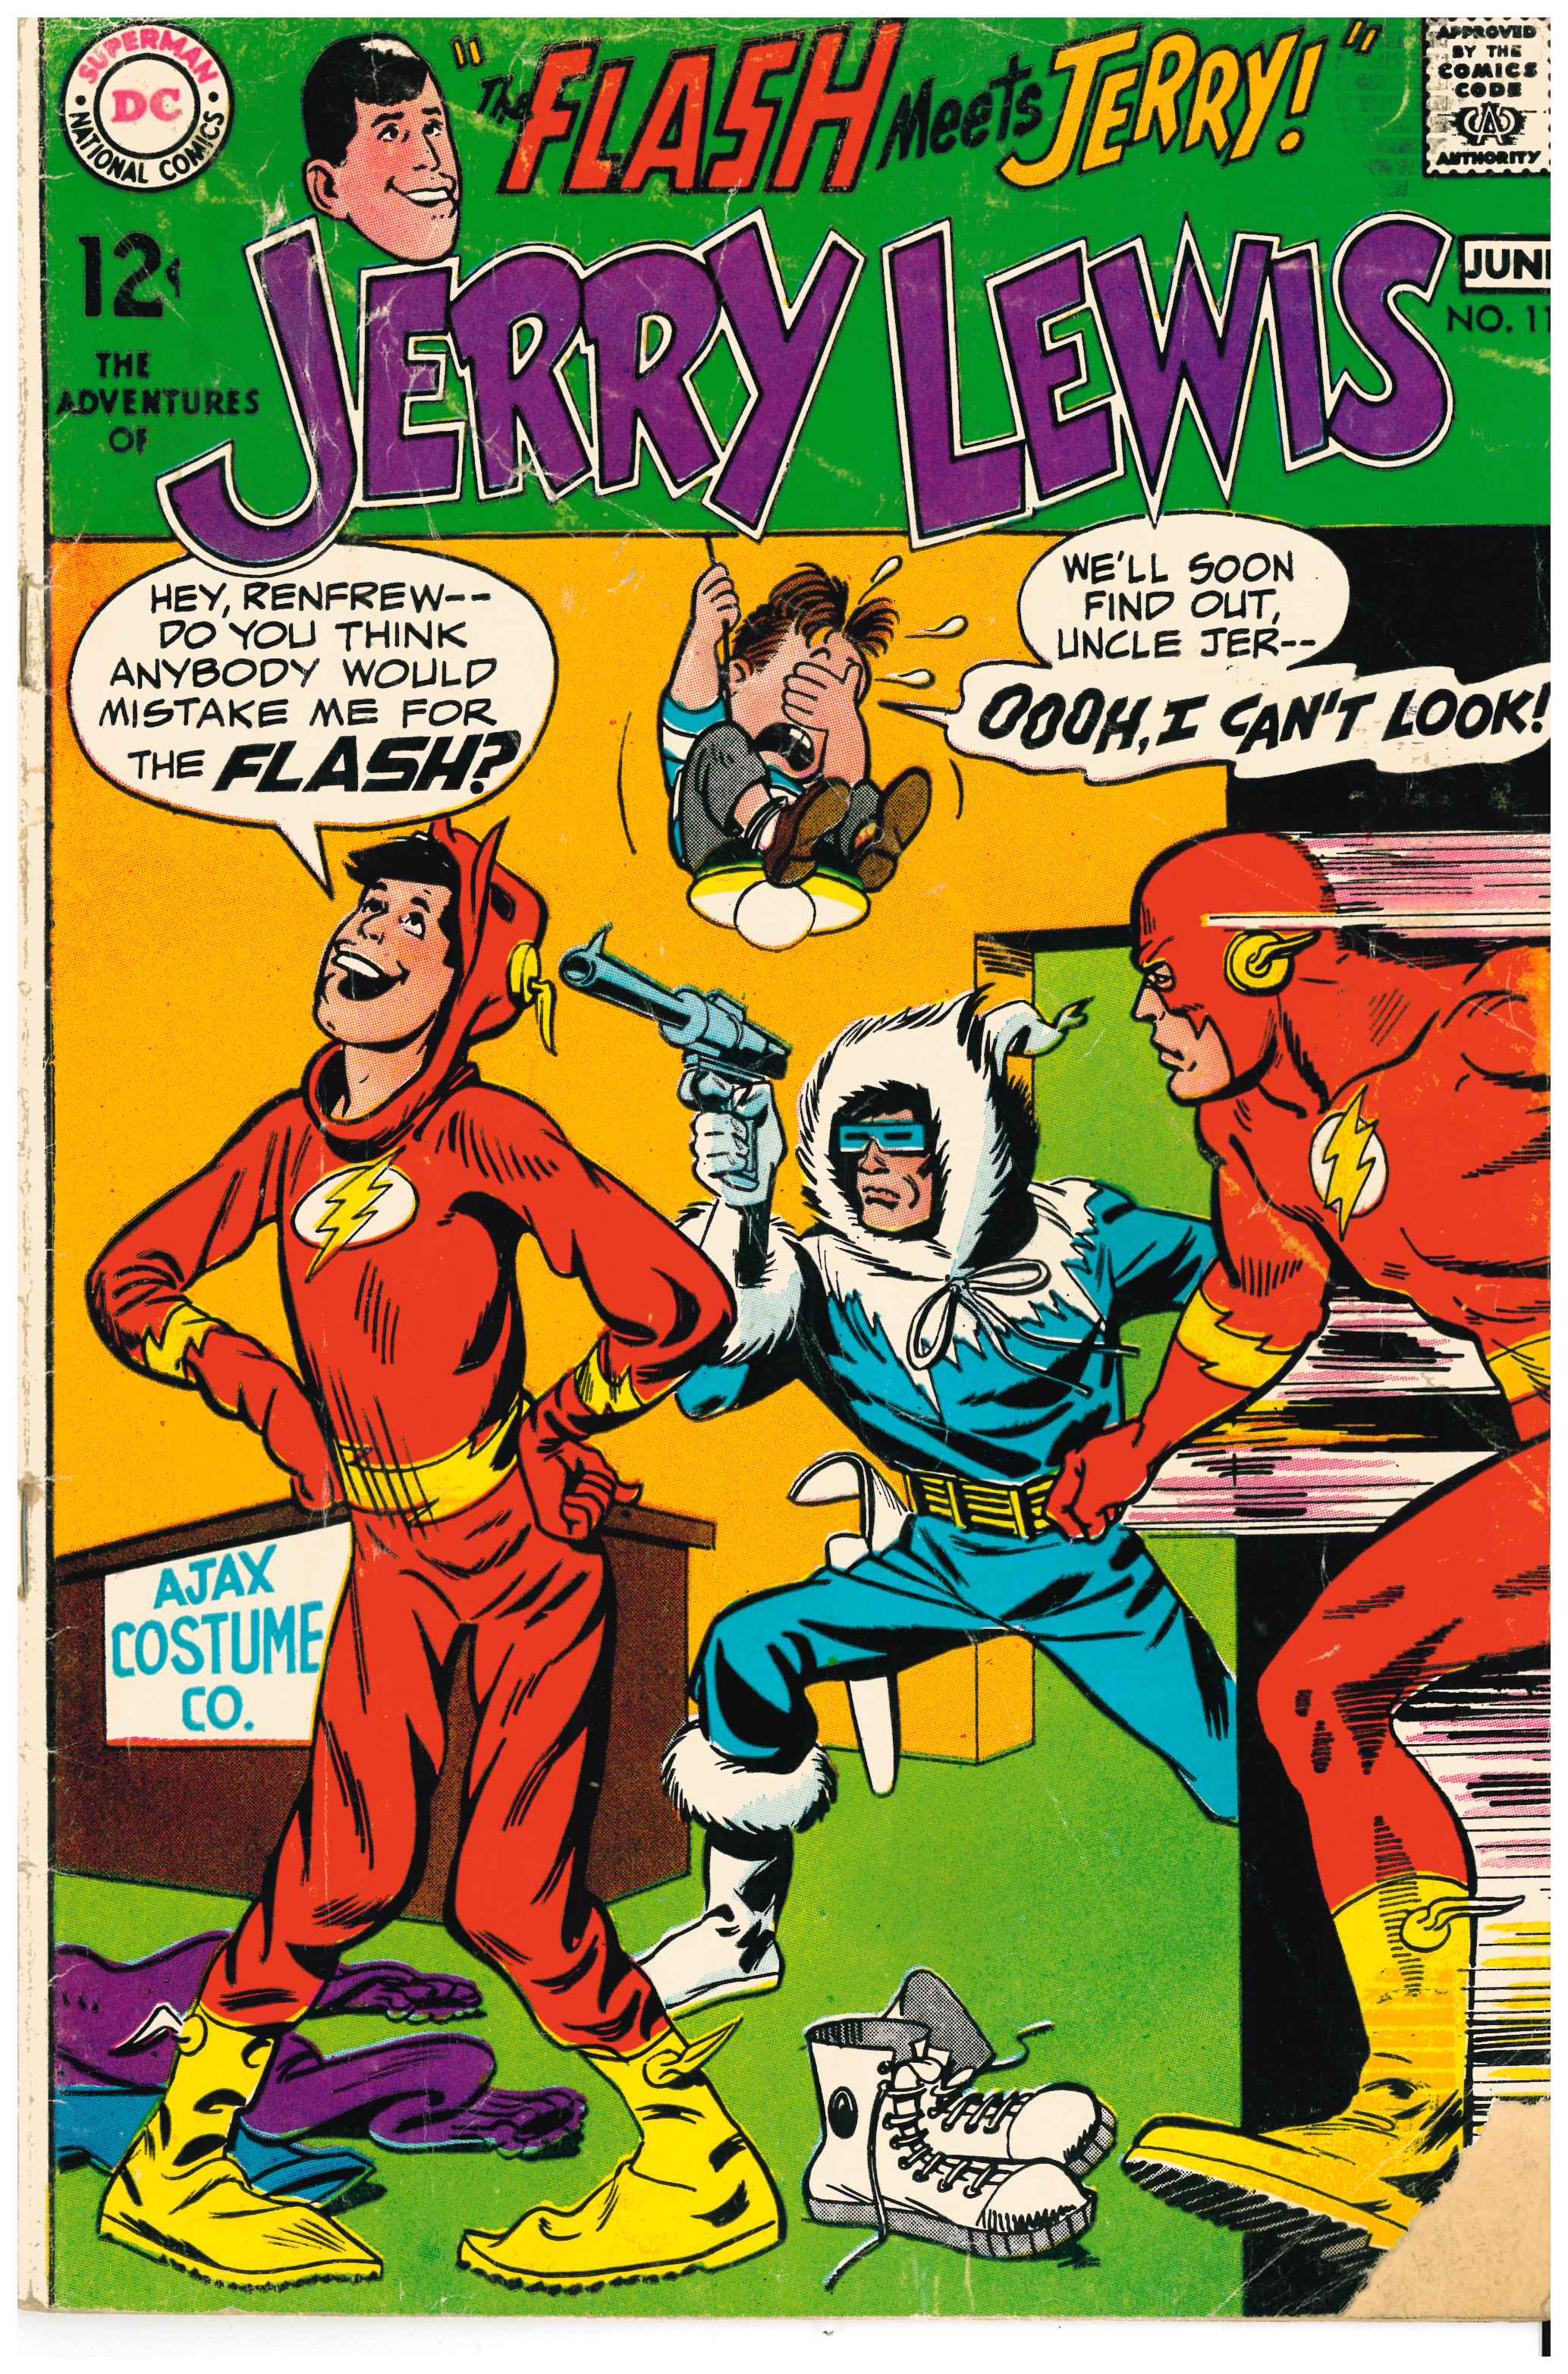 Adventures of Jerry Lewis #112